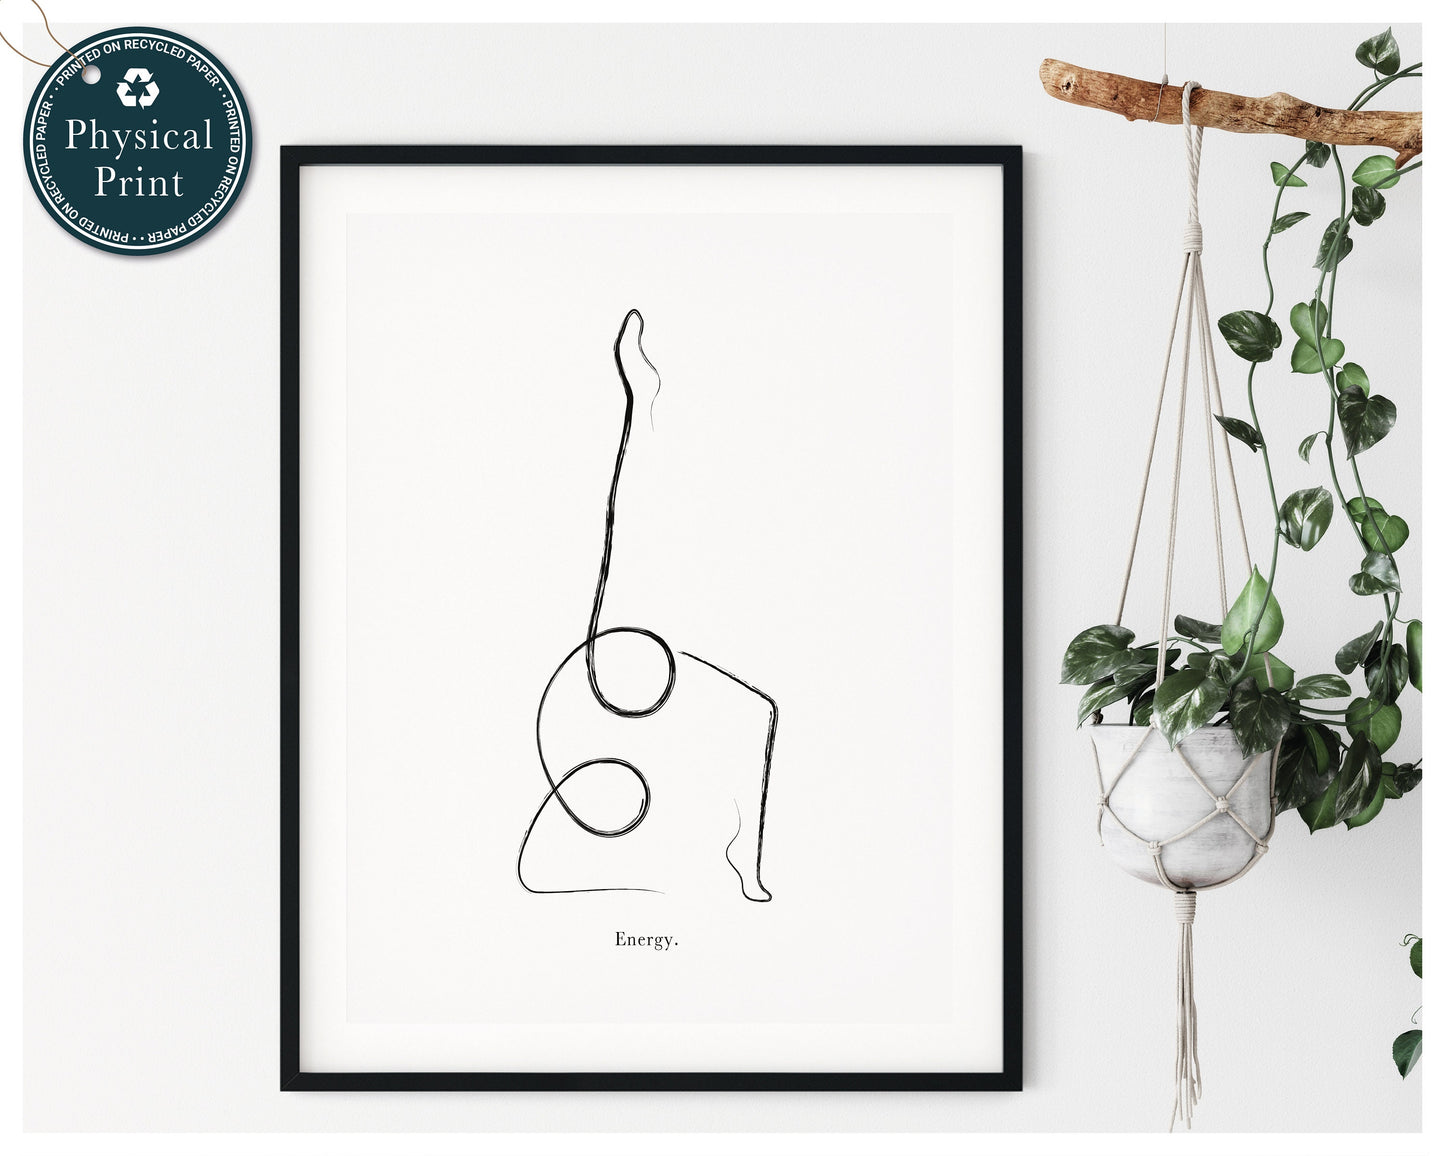 'One legged inverted staff Pose' - Yoga Poster